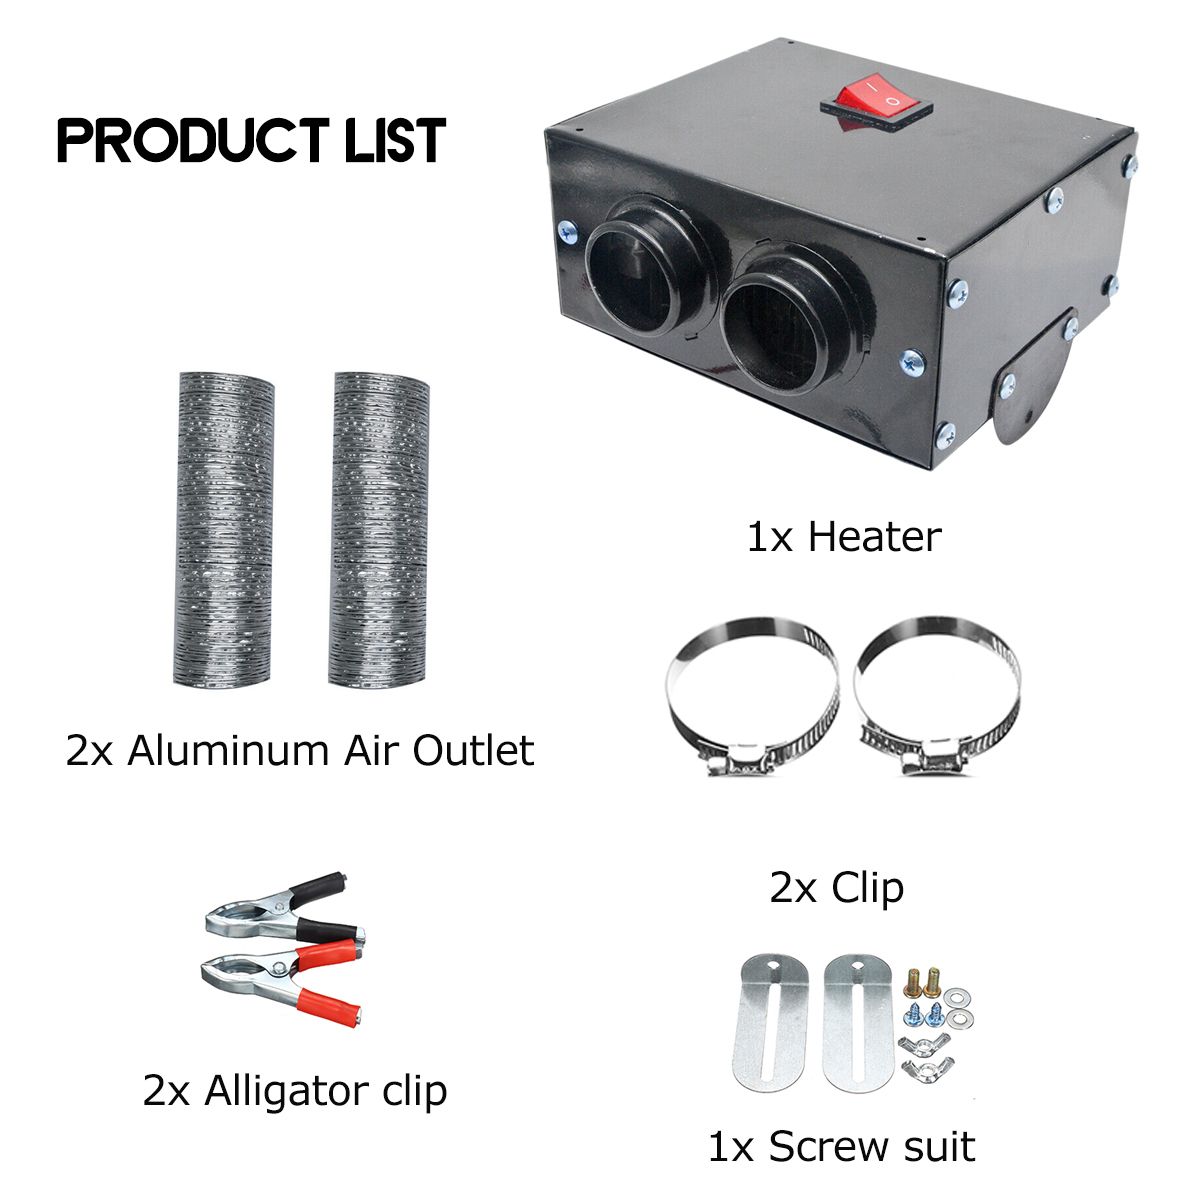 Car-Heater-Defroster-1500w-High-Power-Defrost-Fog-Machine-12v24v-Car-Heating-Car-Appliances-1618902